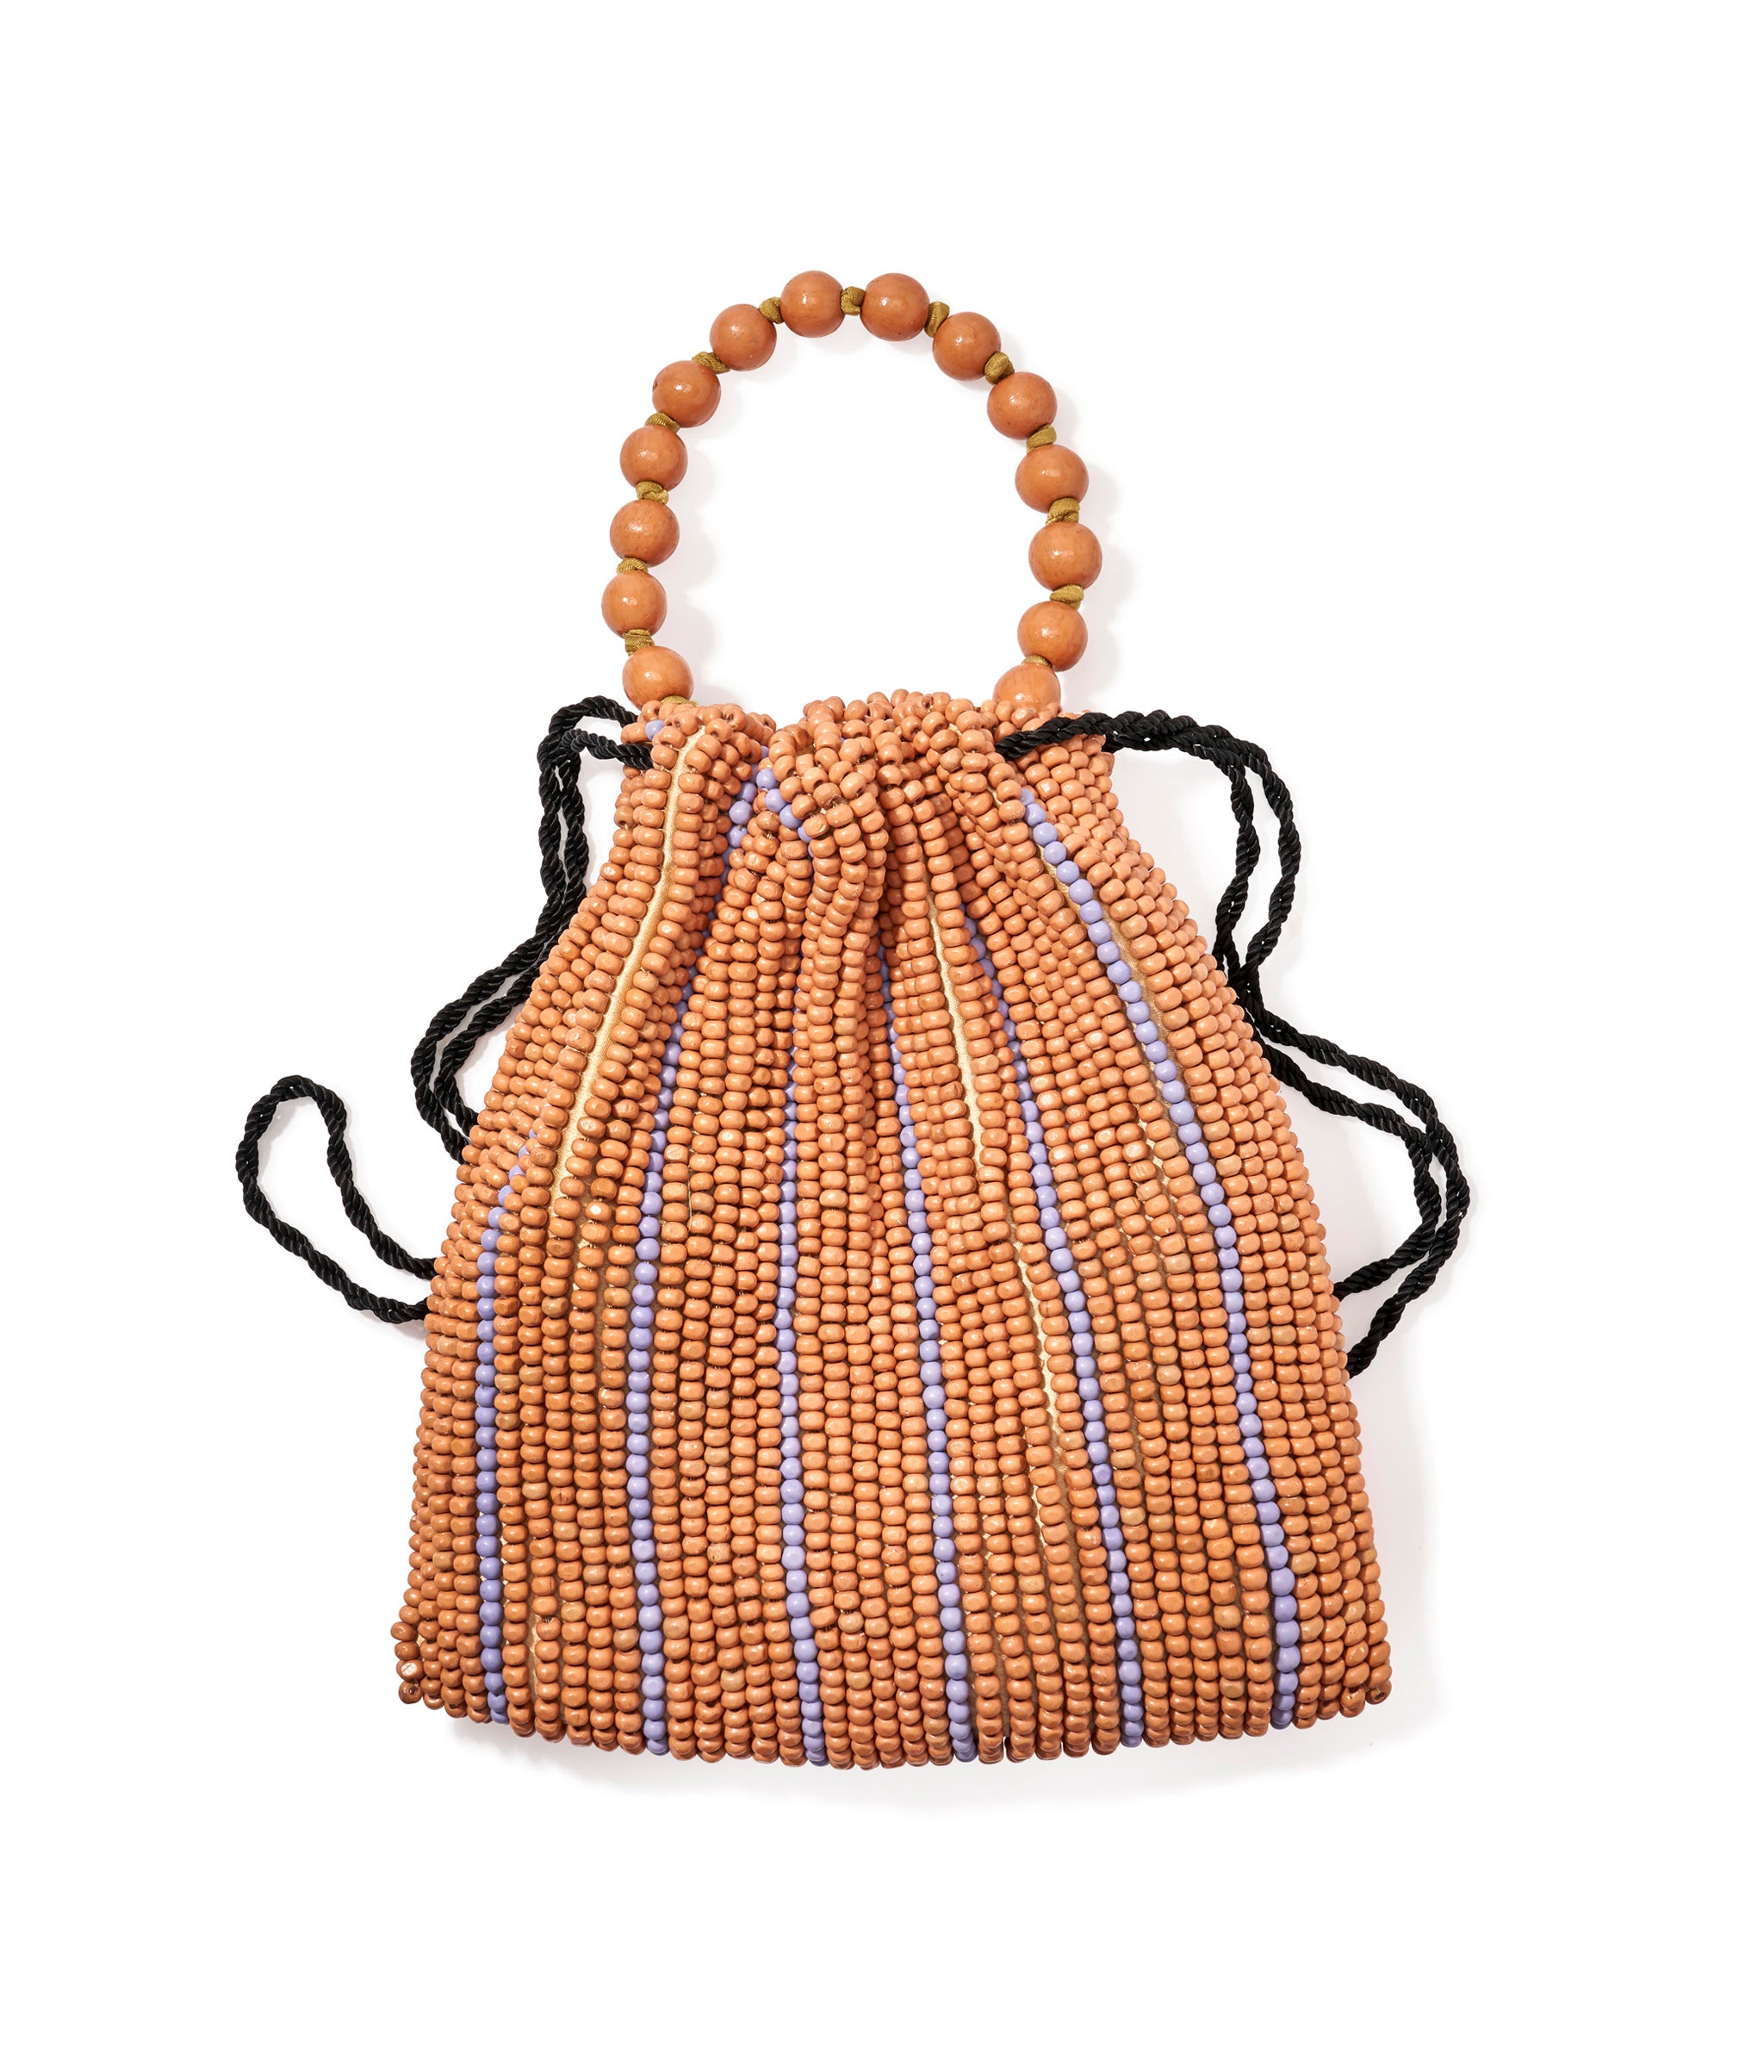 Getaway Bag in Desert Tan. Tan and lilac beaded stripes, wooden bead top handle, black twist cord drawstring.